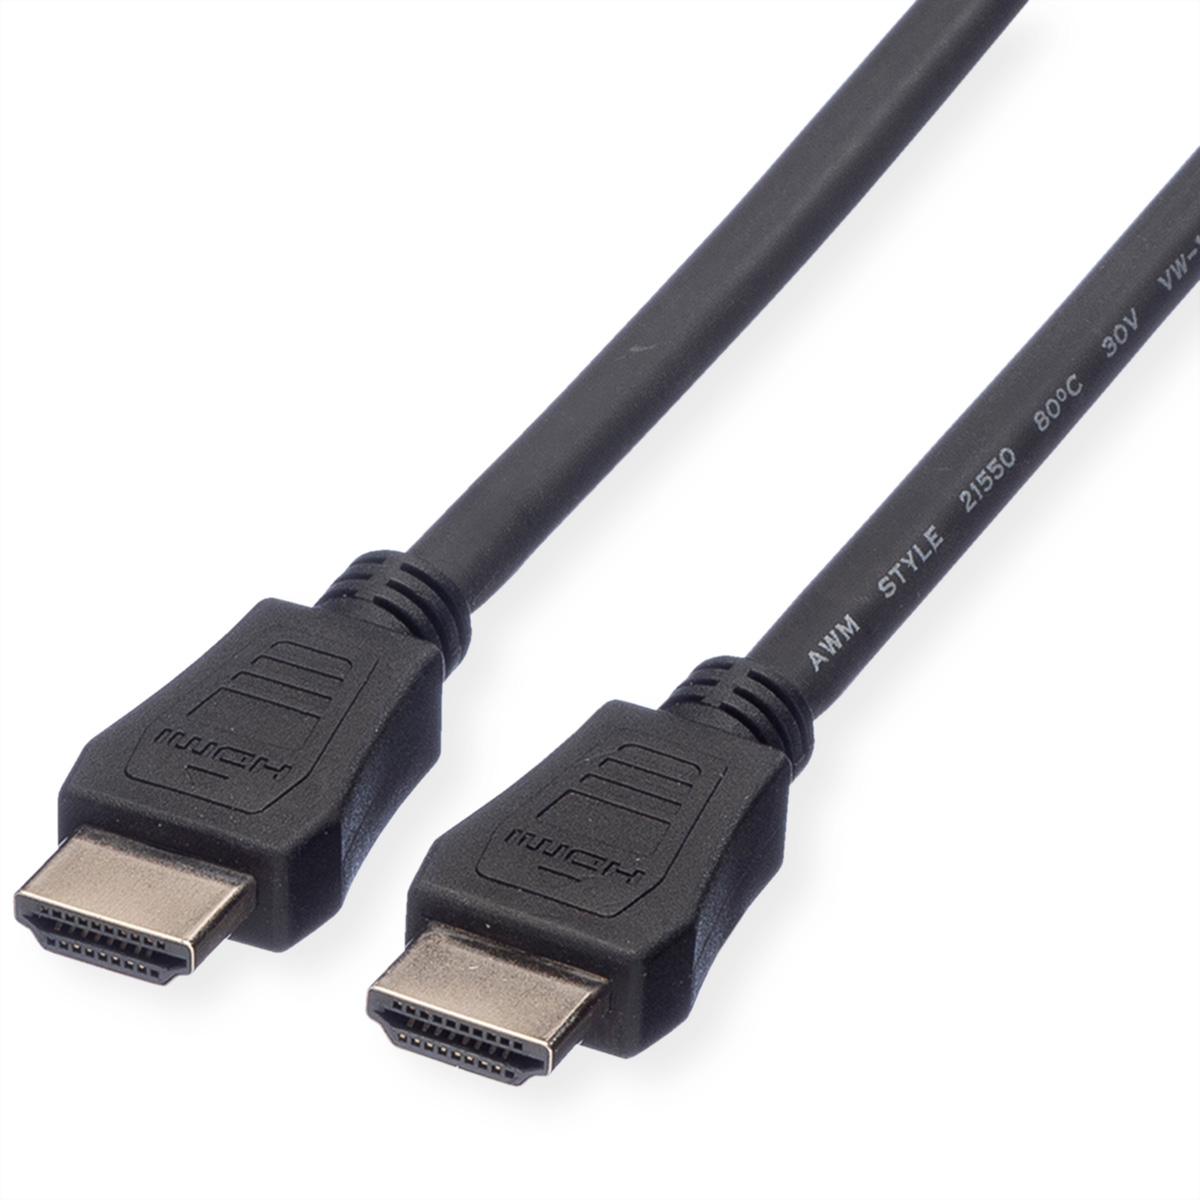 Kabel mit mit Kabel Ethernet High High Ethernet, Speed Speed HDMI VALUE HDMI LSOH